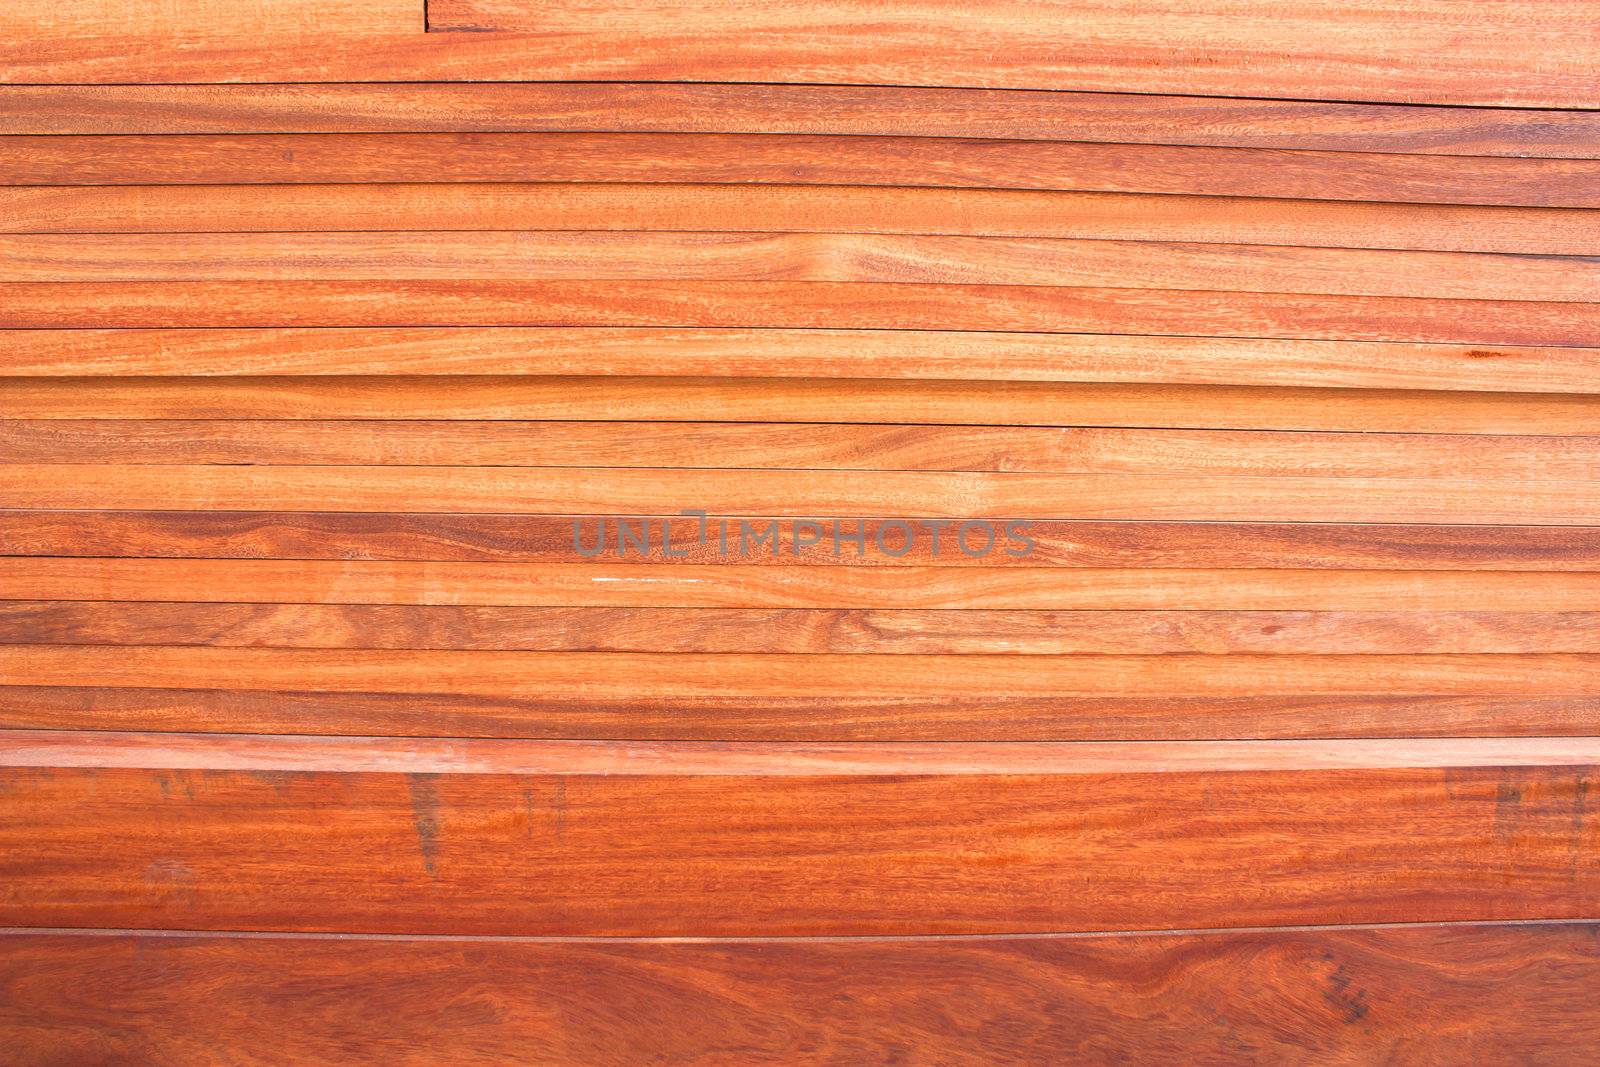 Durable hardwood redwood lumber to build homes.